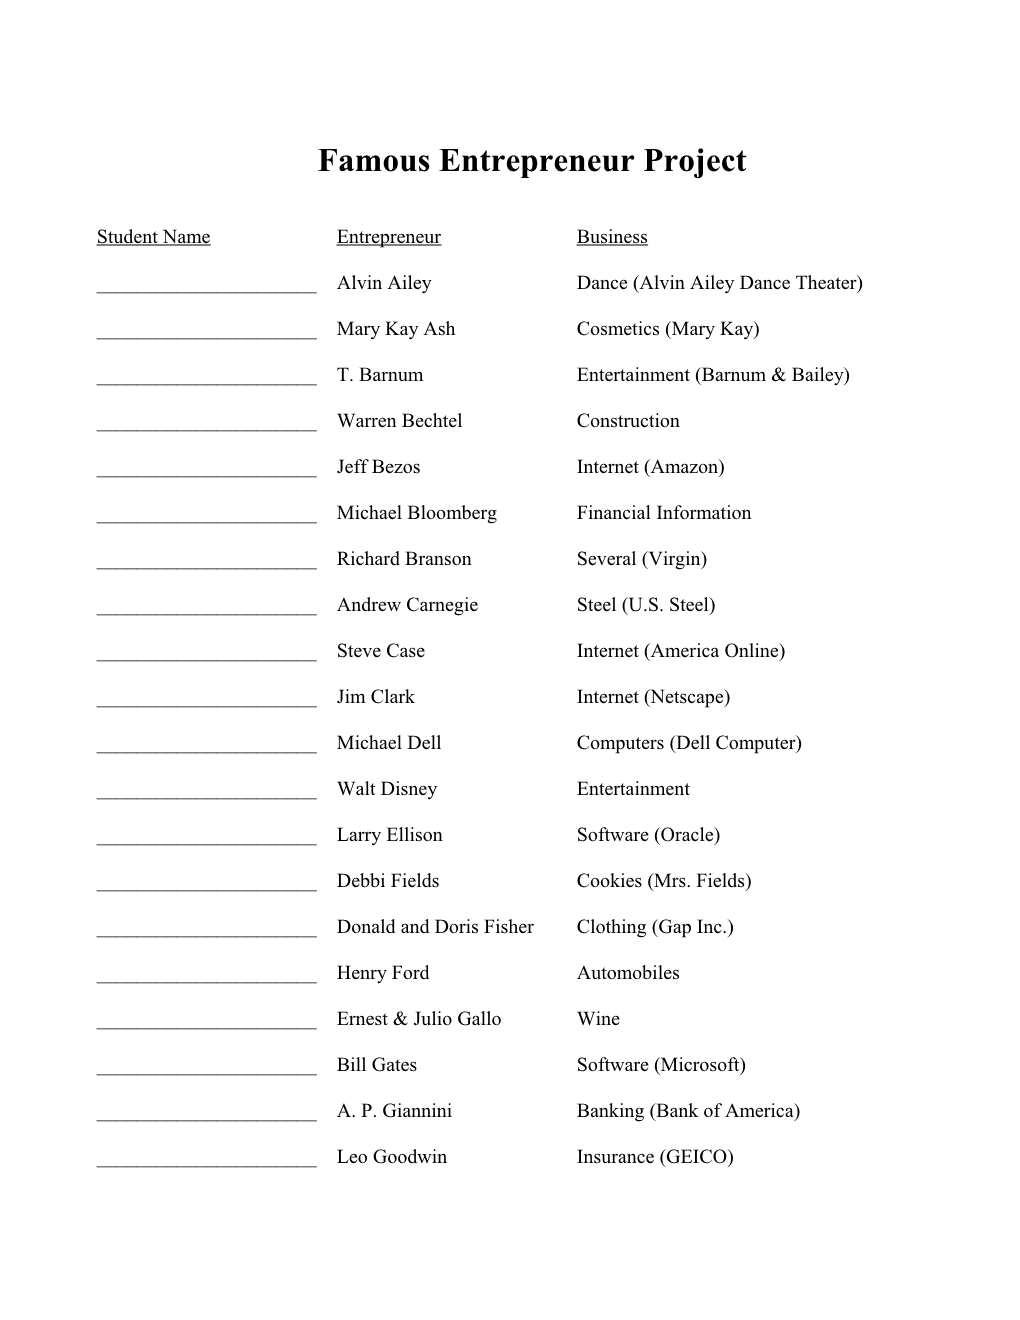 List of Famous Entrepreneurs